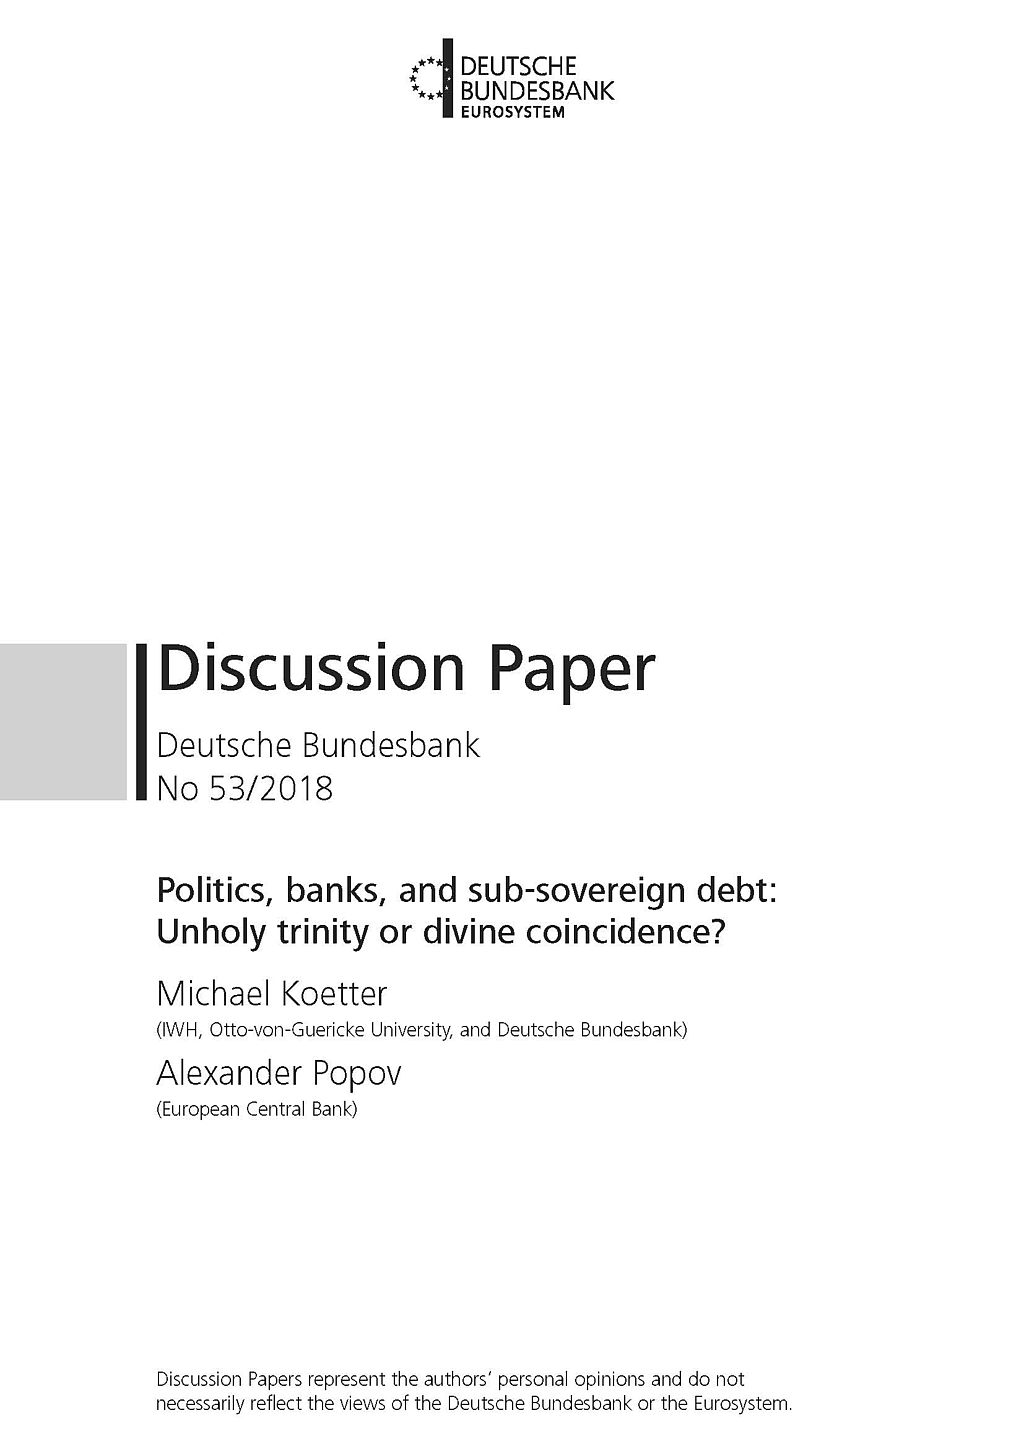 cover_Deutsche-Bundesbank-Discussion-Paper_2018-53.jpg